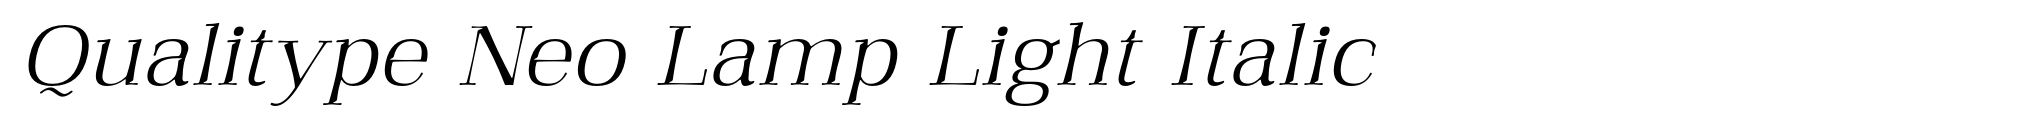 Qualitype Neo Lamp Light Italic image